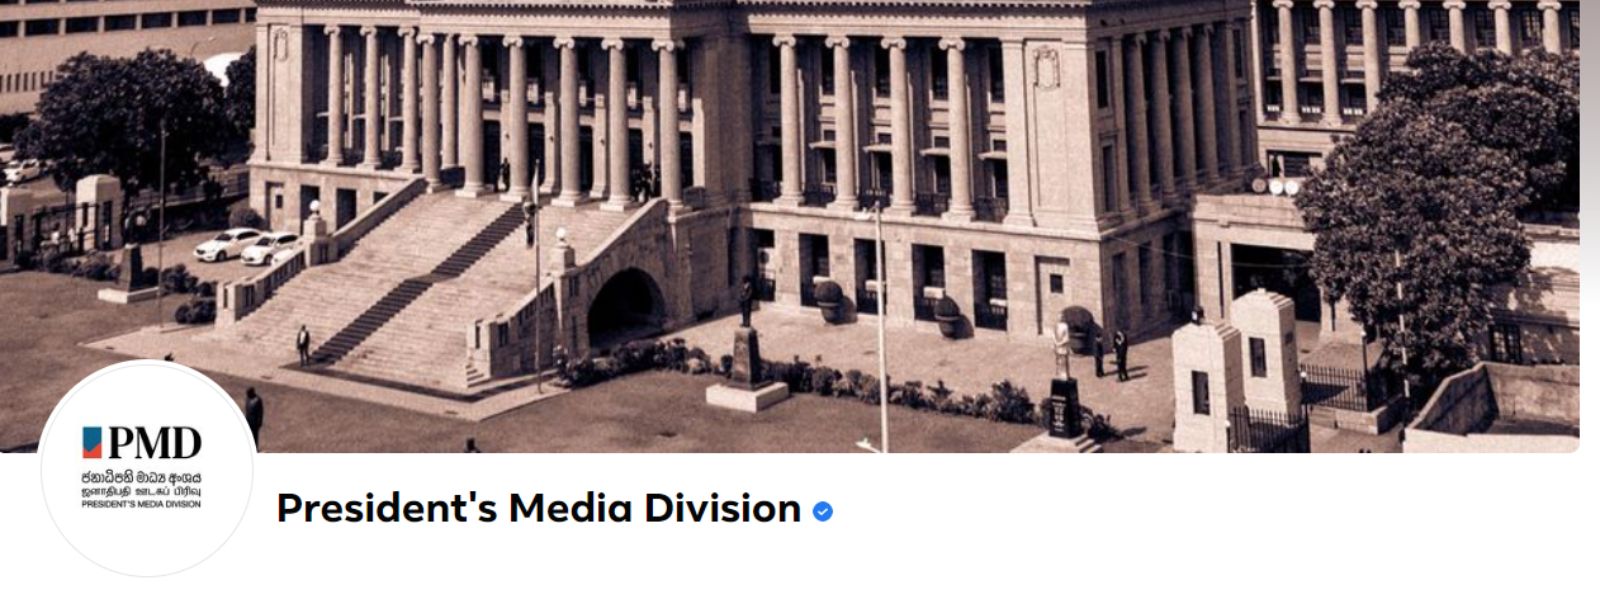 President's Media Division responds to strikes